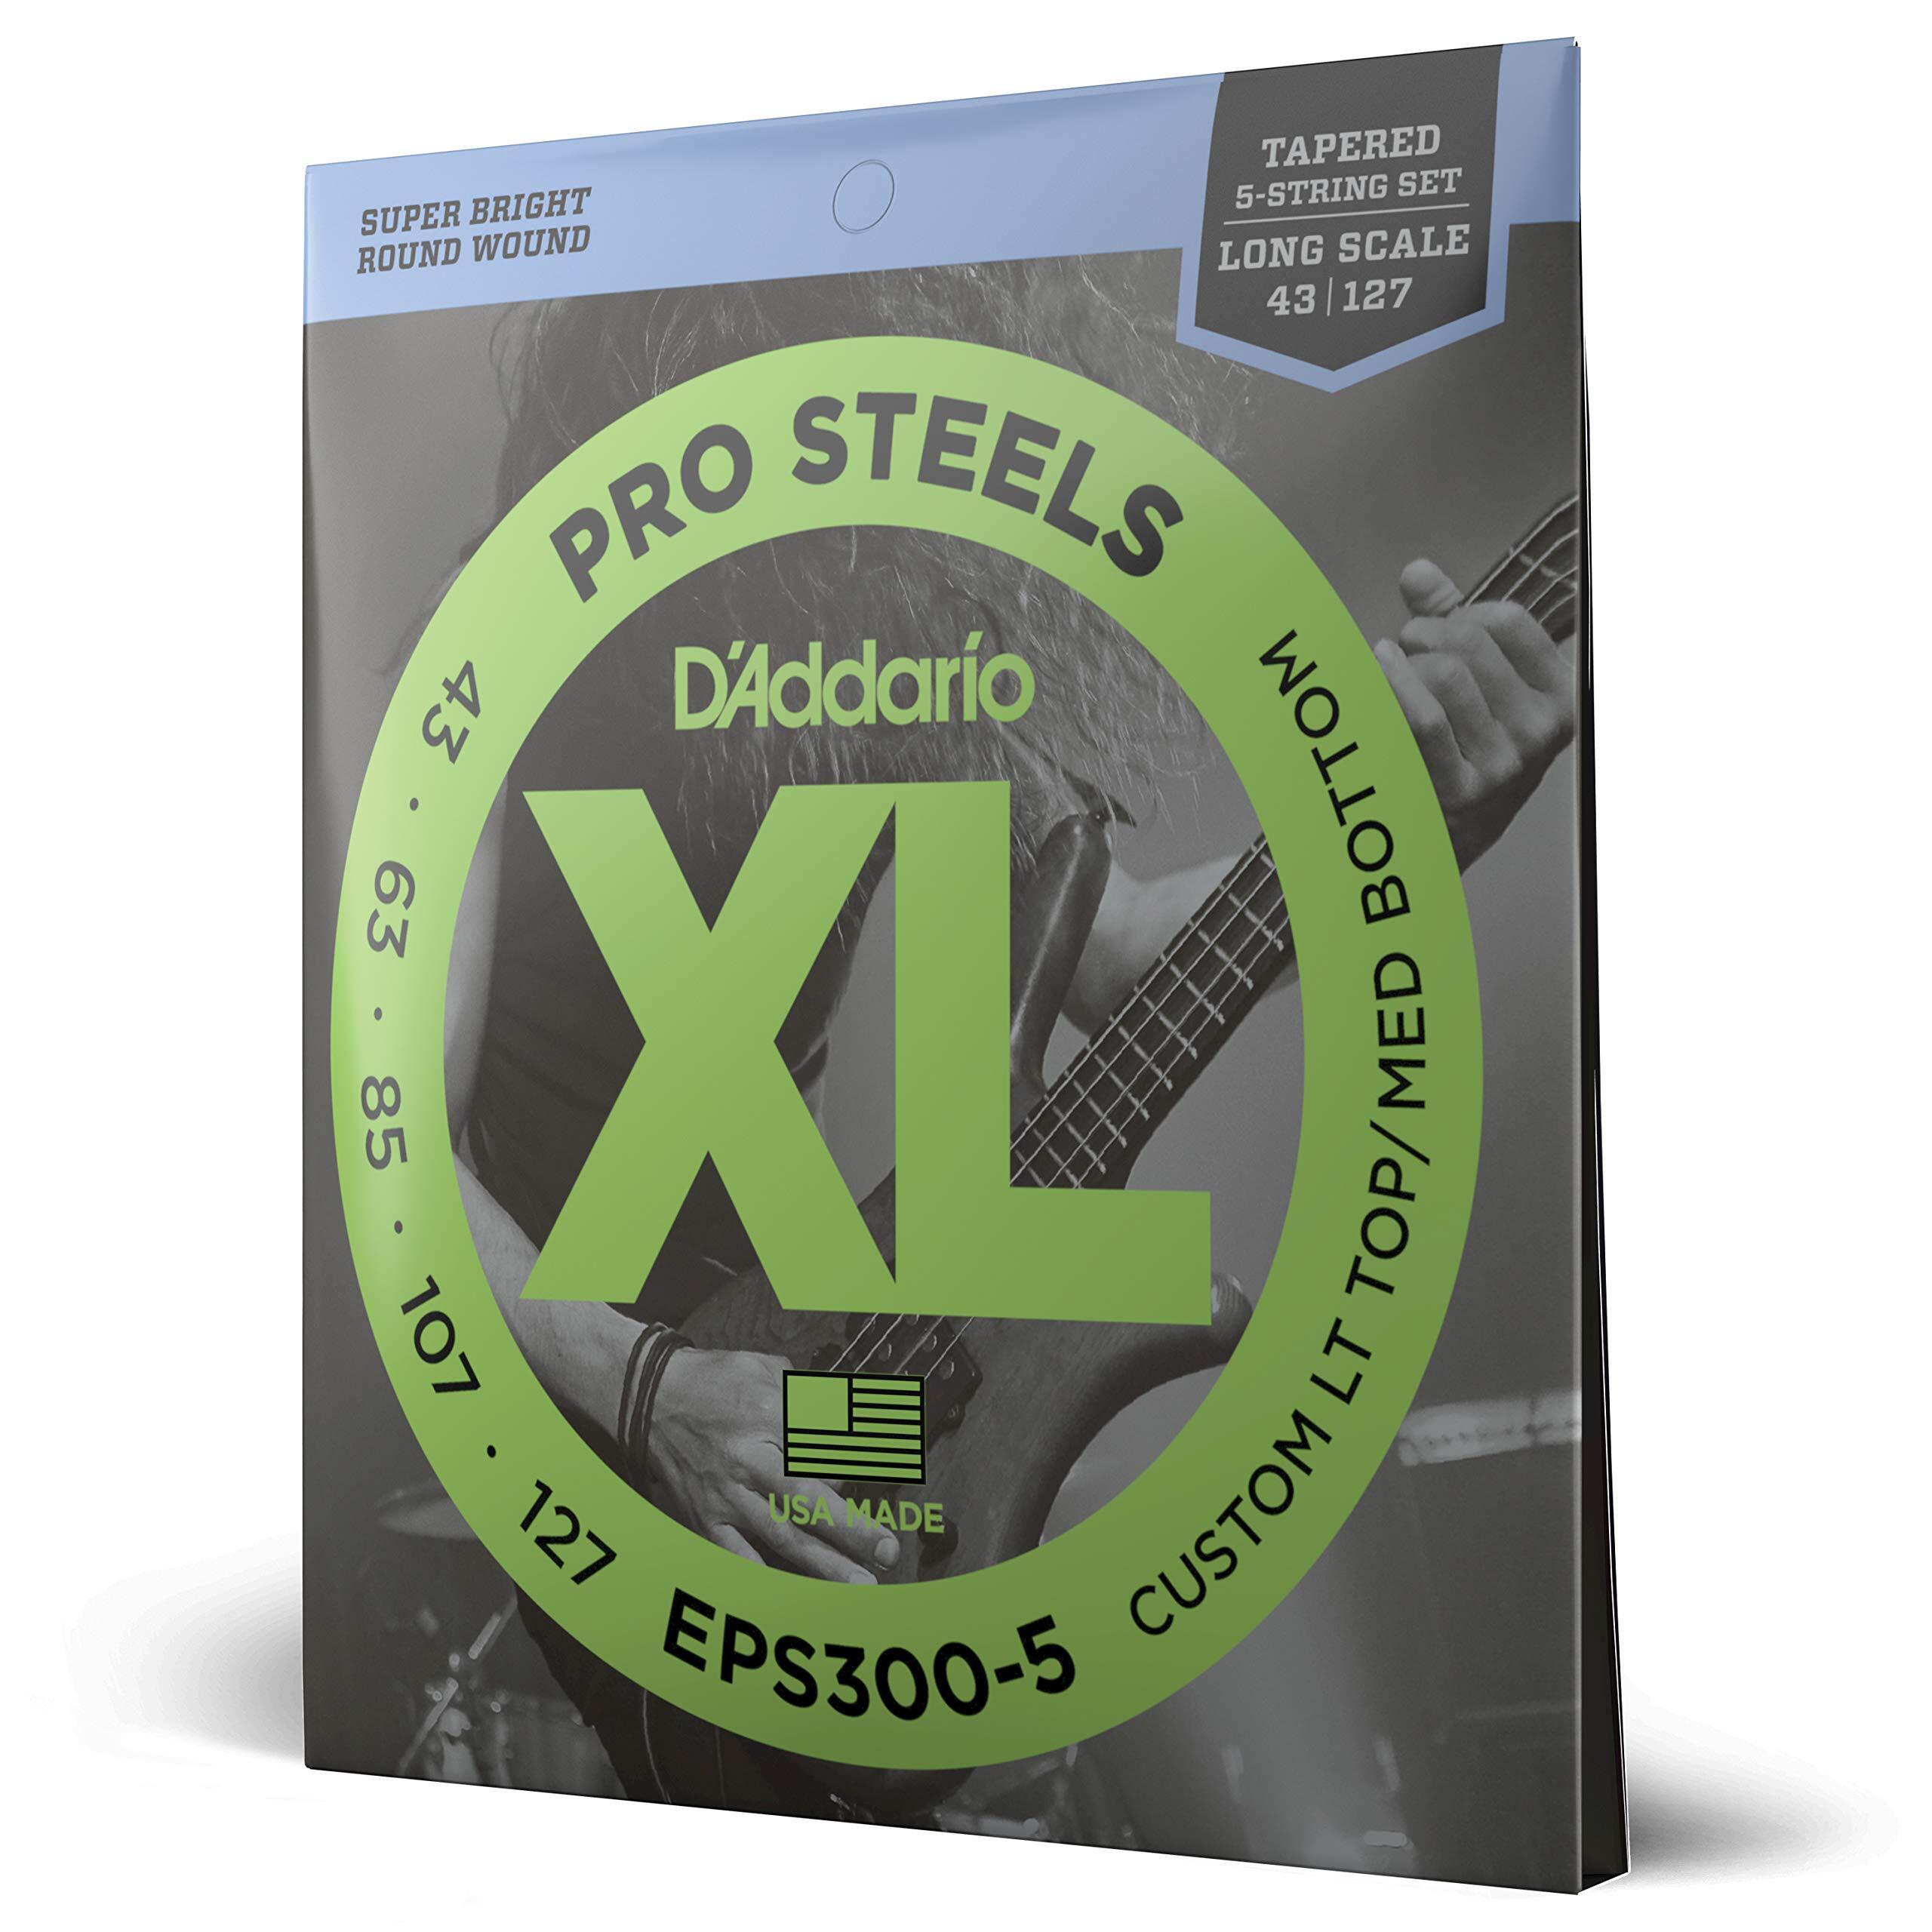 D'ADDARIO 5er bas XL Pro Steels 43-127 43-60-85-107-127, EPS300-5